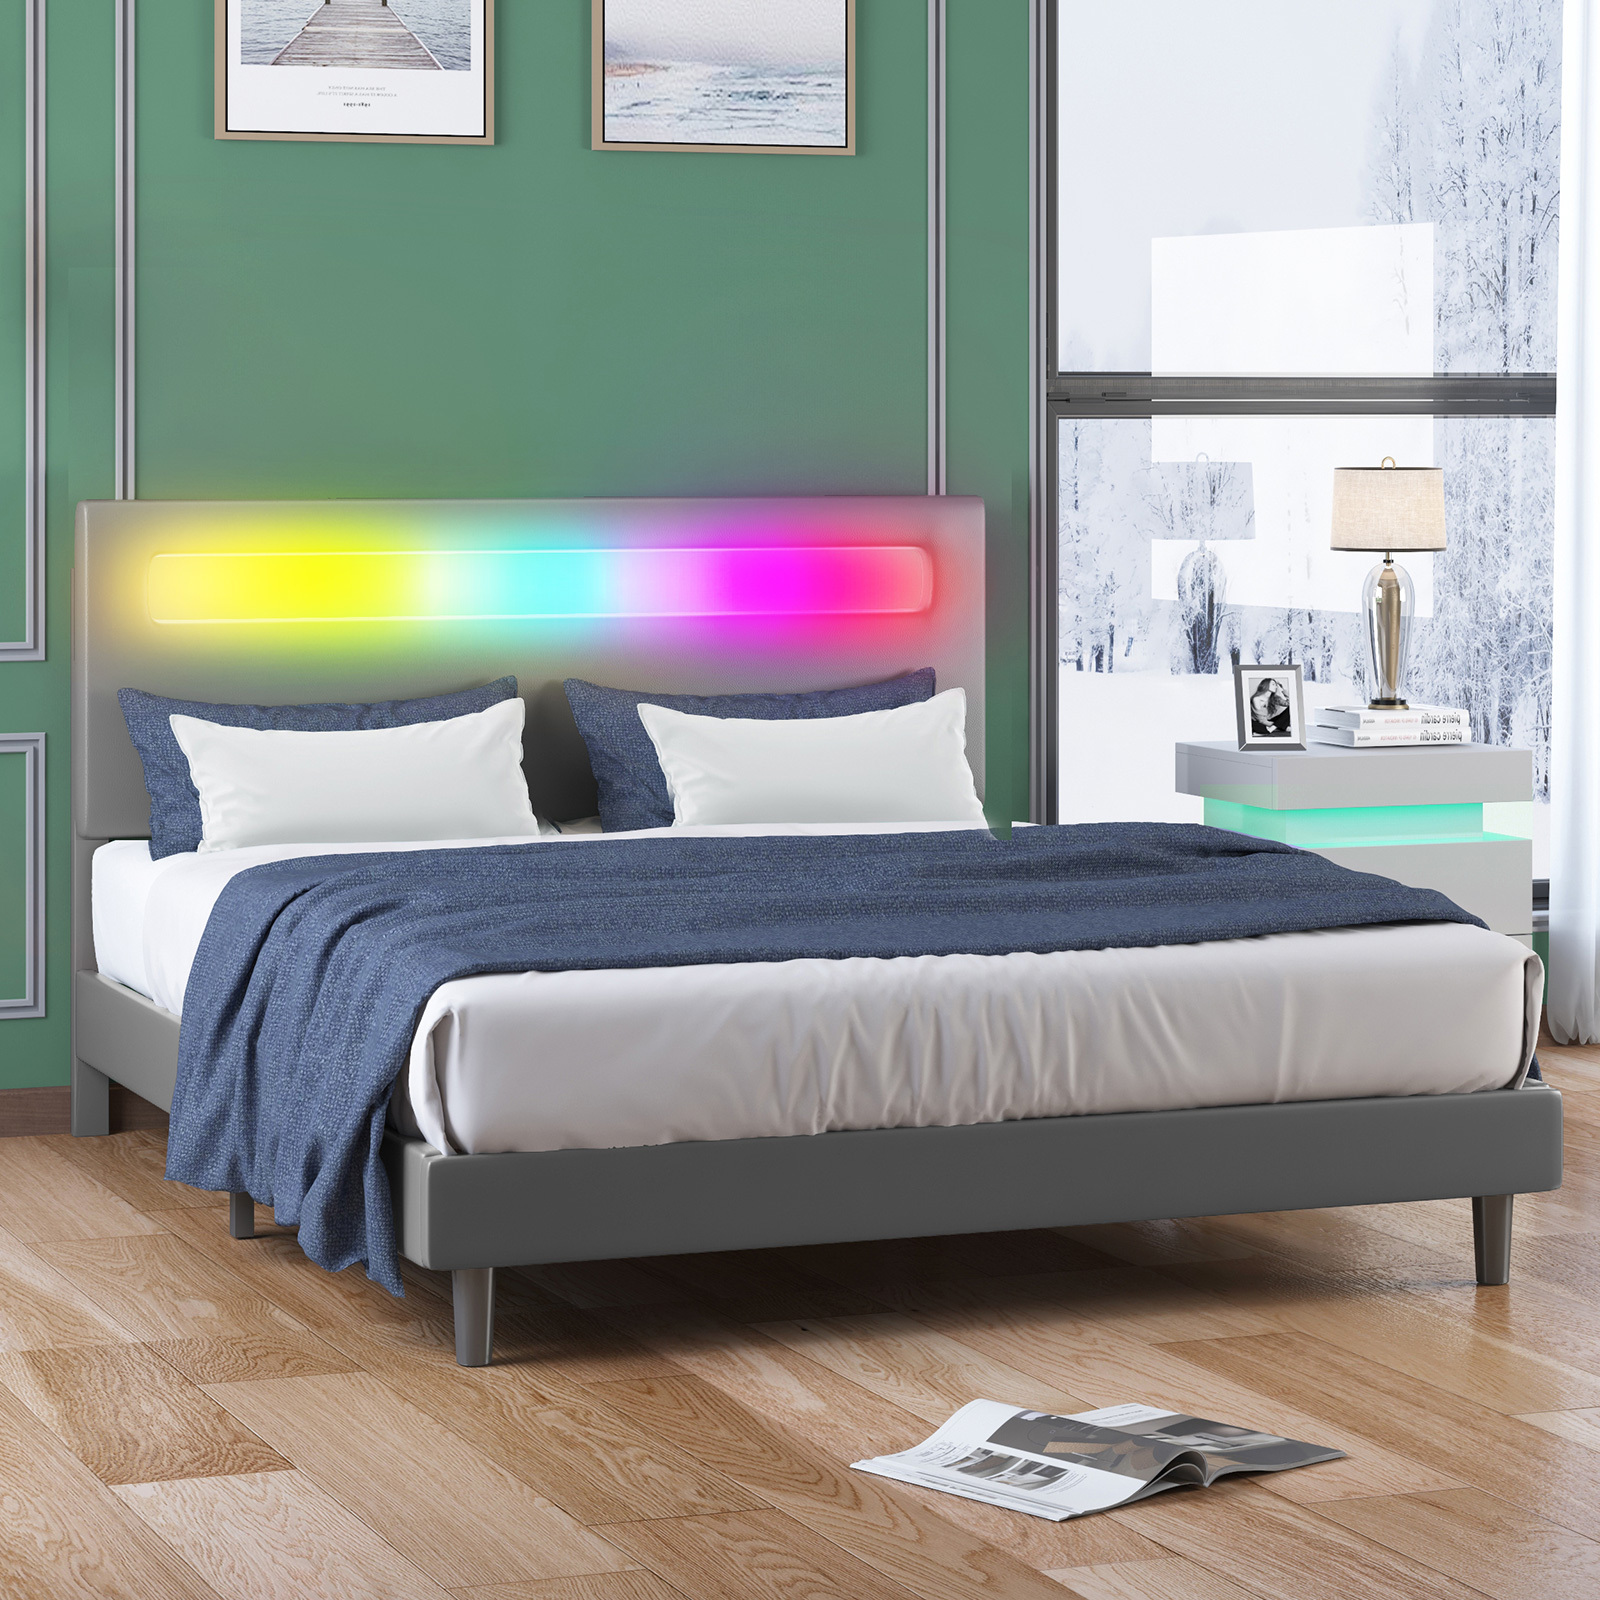 Mjkone Platform Bed Frame with Smart LED Strip Light, Full Size Bed Frame with RGB LED Headboard, RGB LED Light Controlled by Alexa or APP, Full Bed Frames Adjustable Lighting Effects (Full, Grey) - image 1 of 10